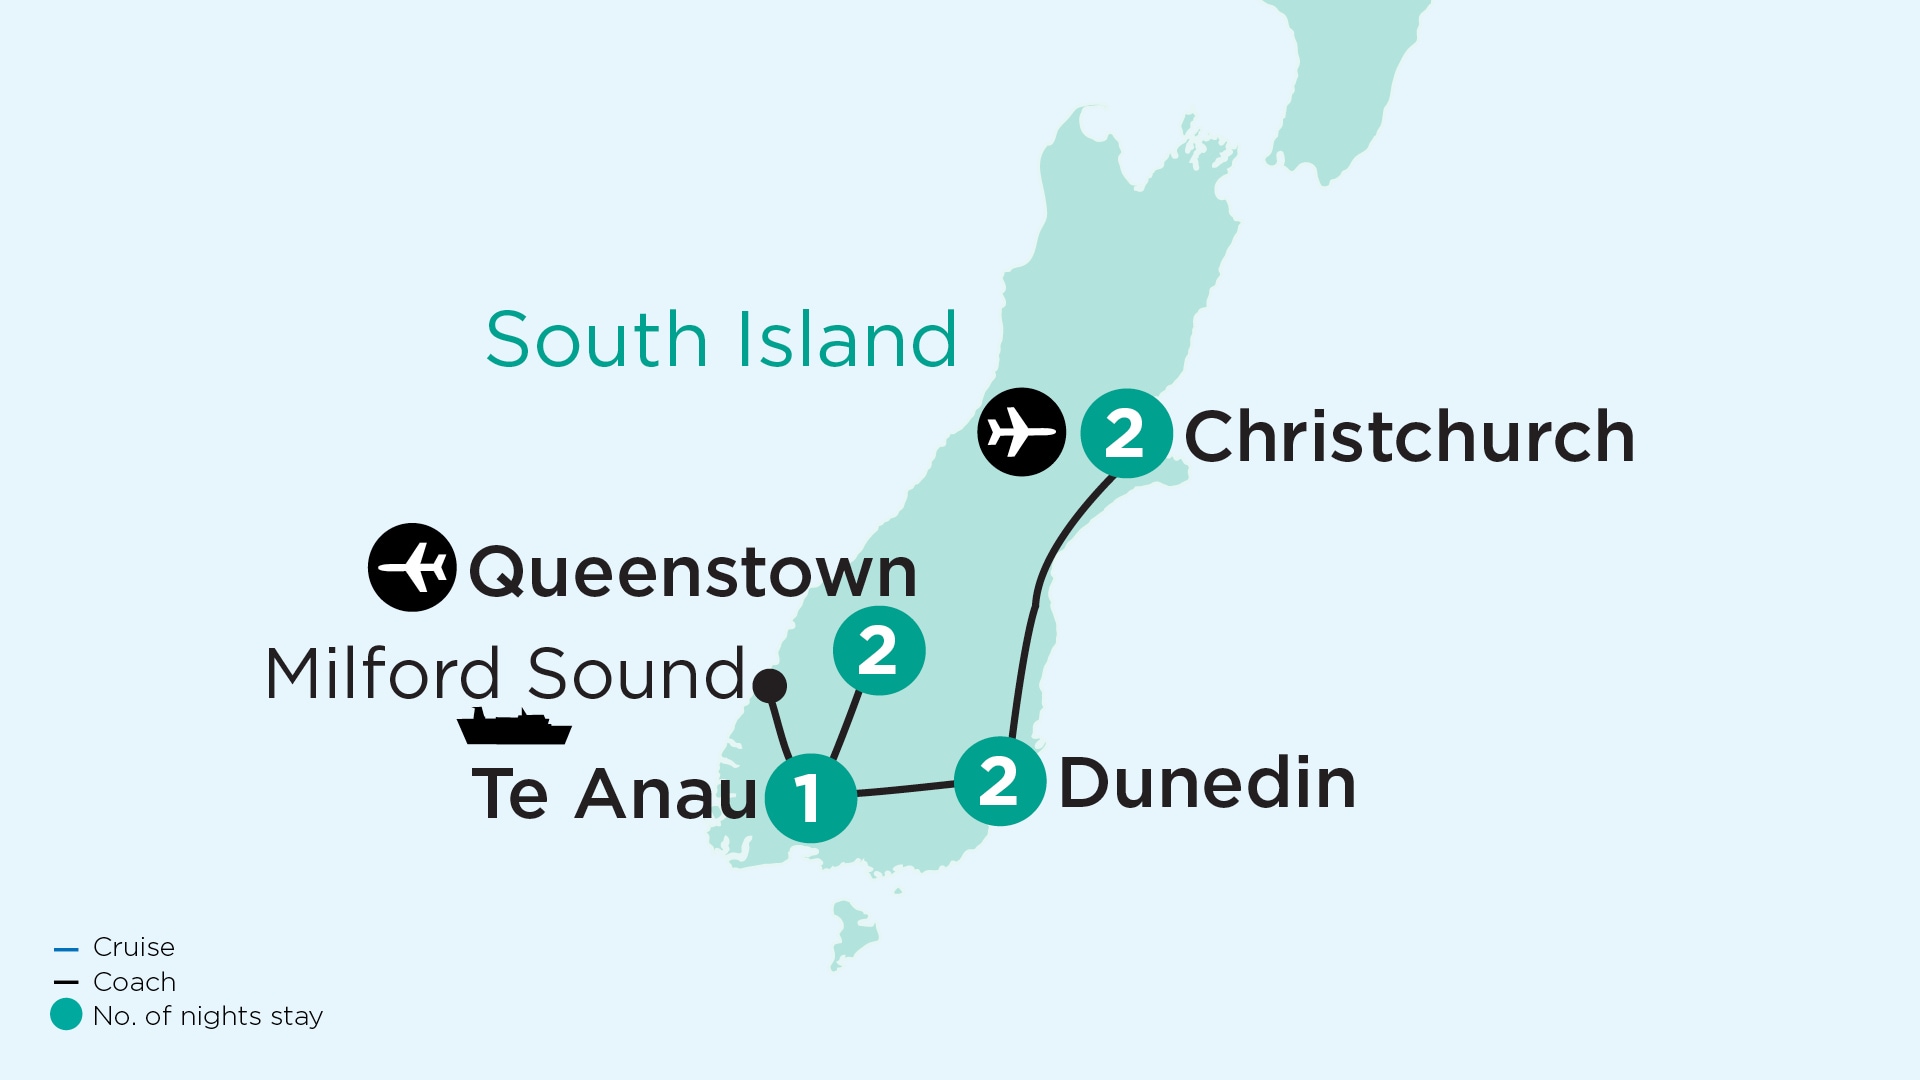 tourhub | APT | New Zealand’s Gardens & Natural Wonders | Tour Map